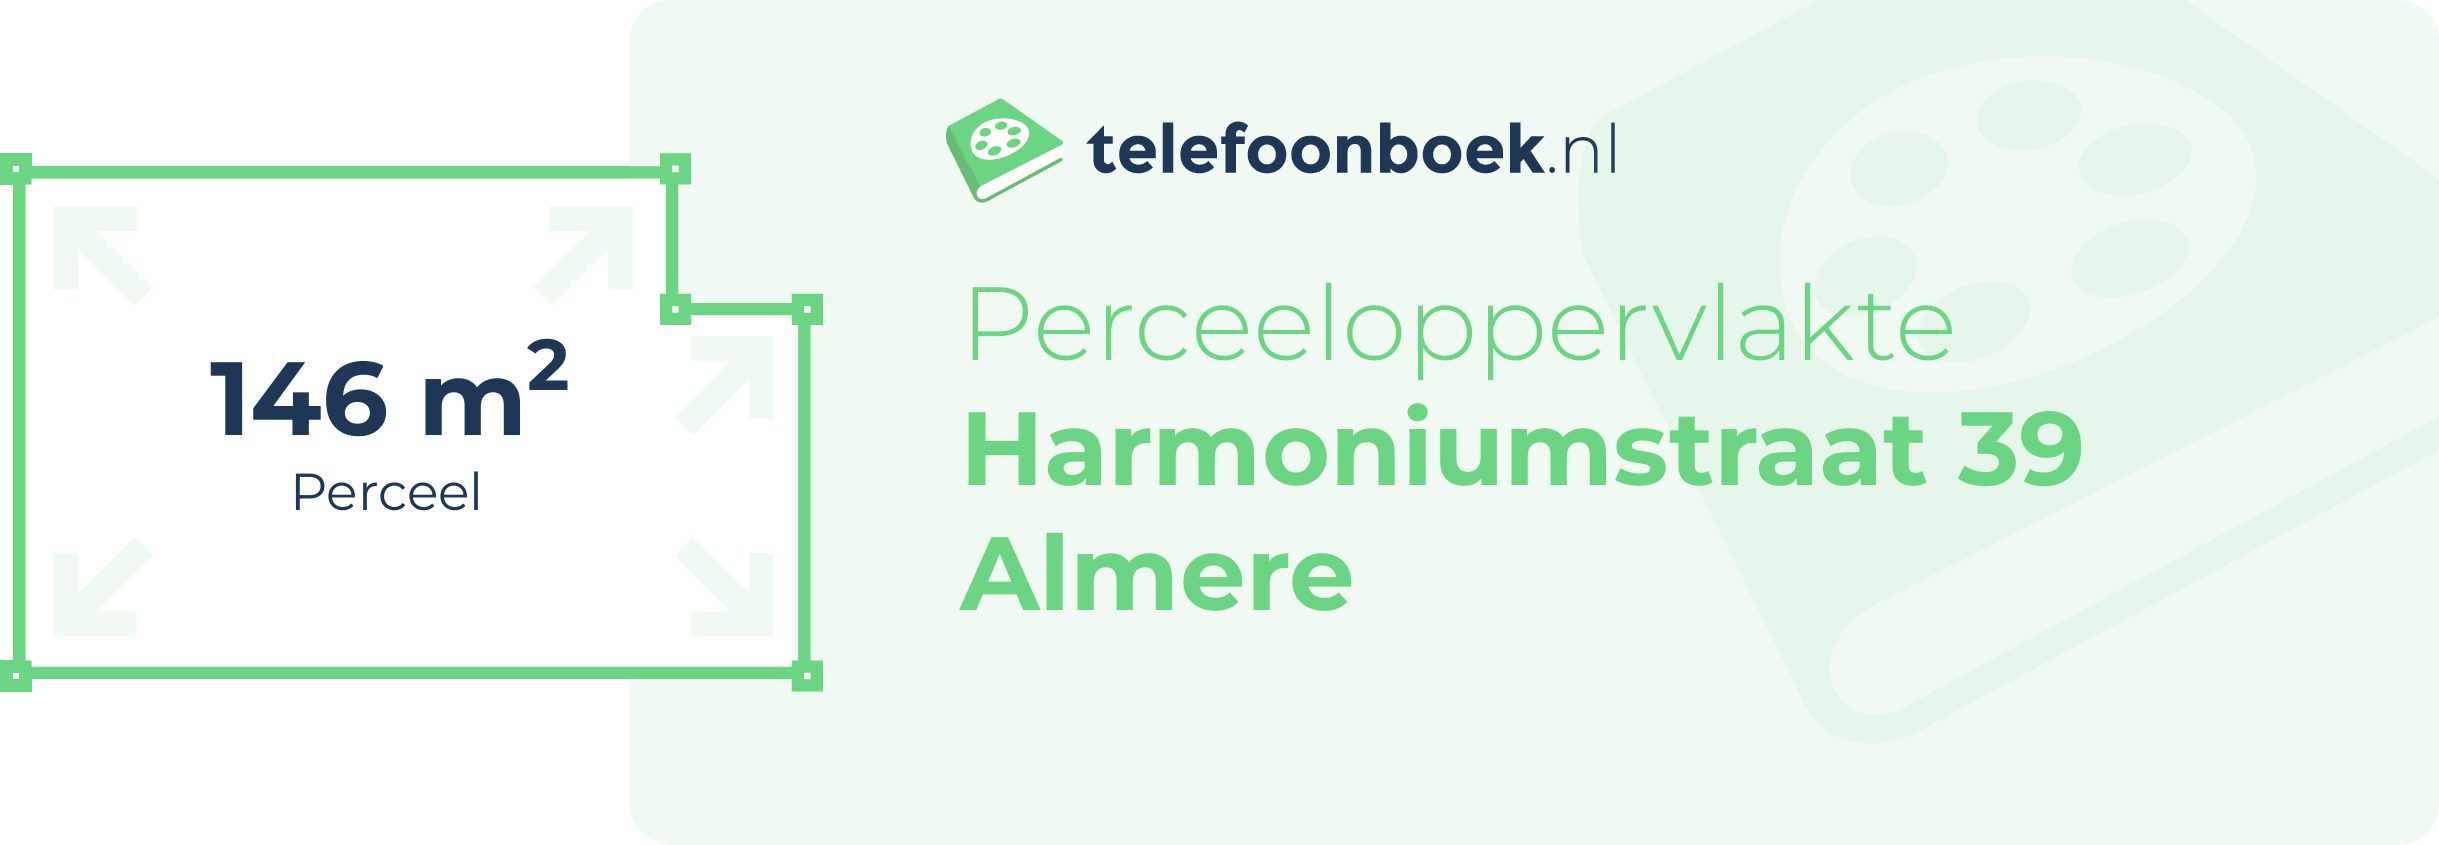 Perceeloppervlakte Harmoniumstraat 39 Almere